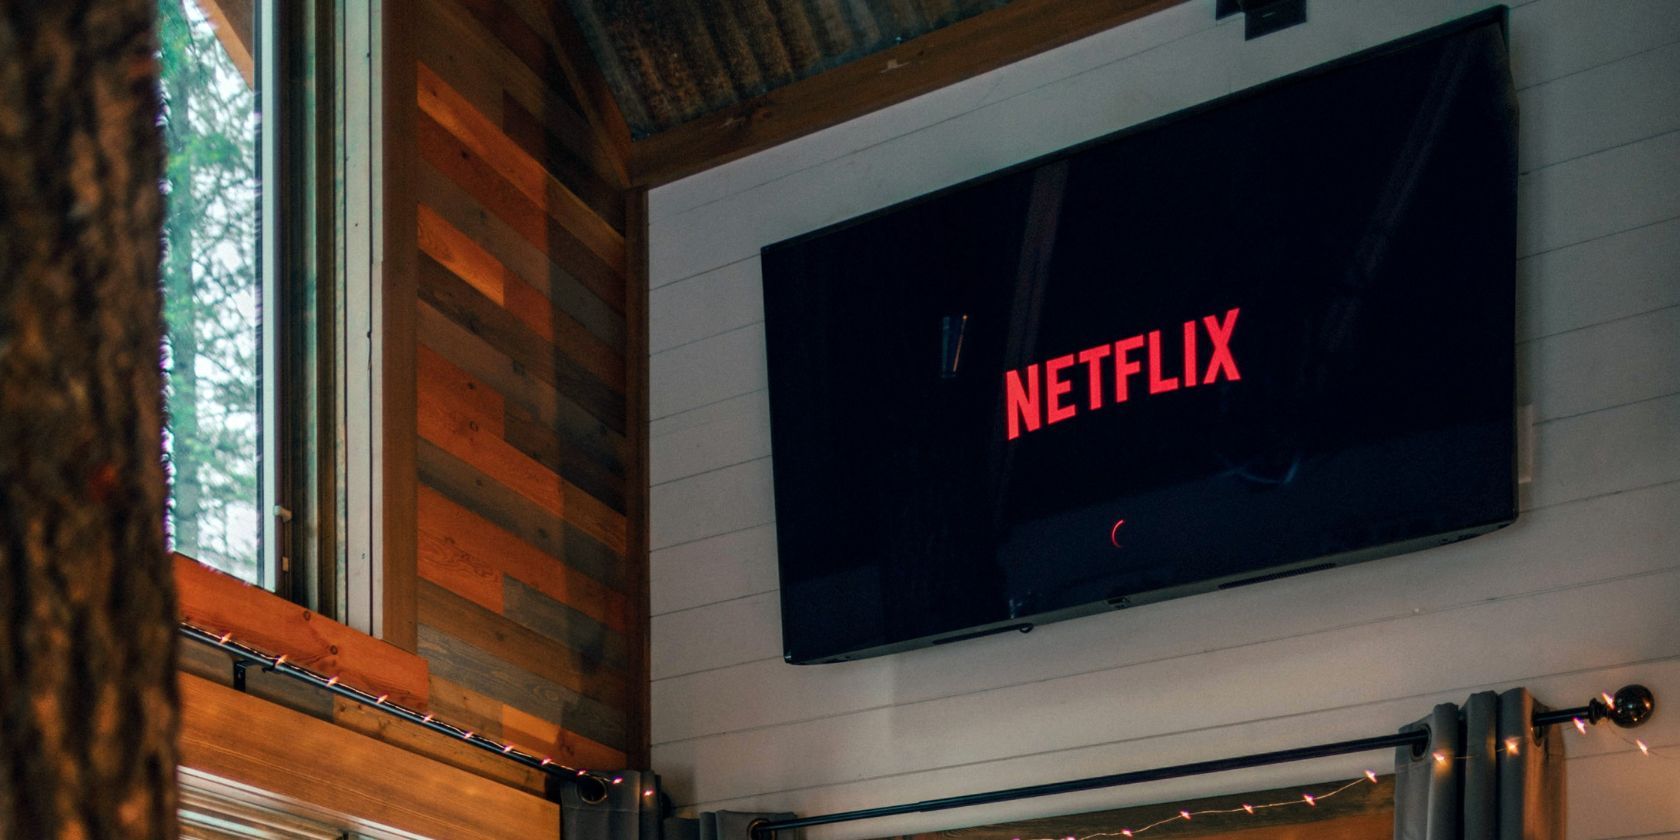 Netflix on flat screen